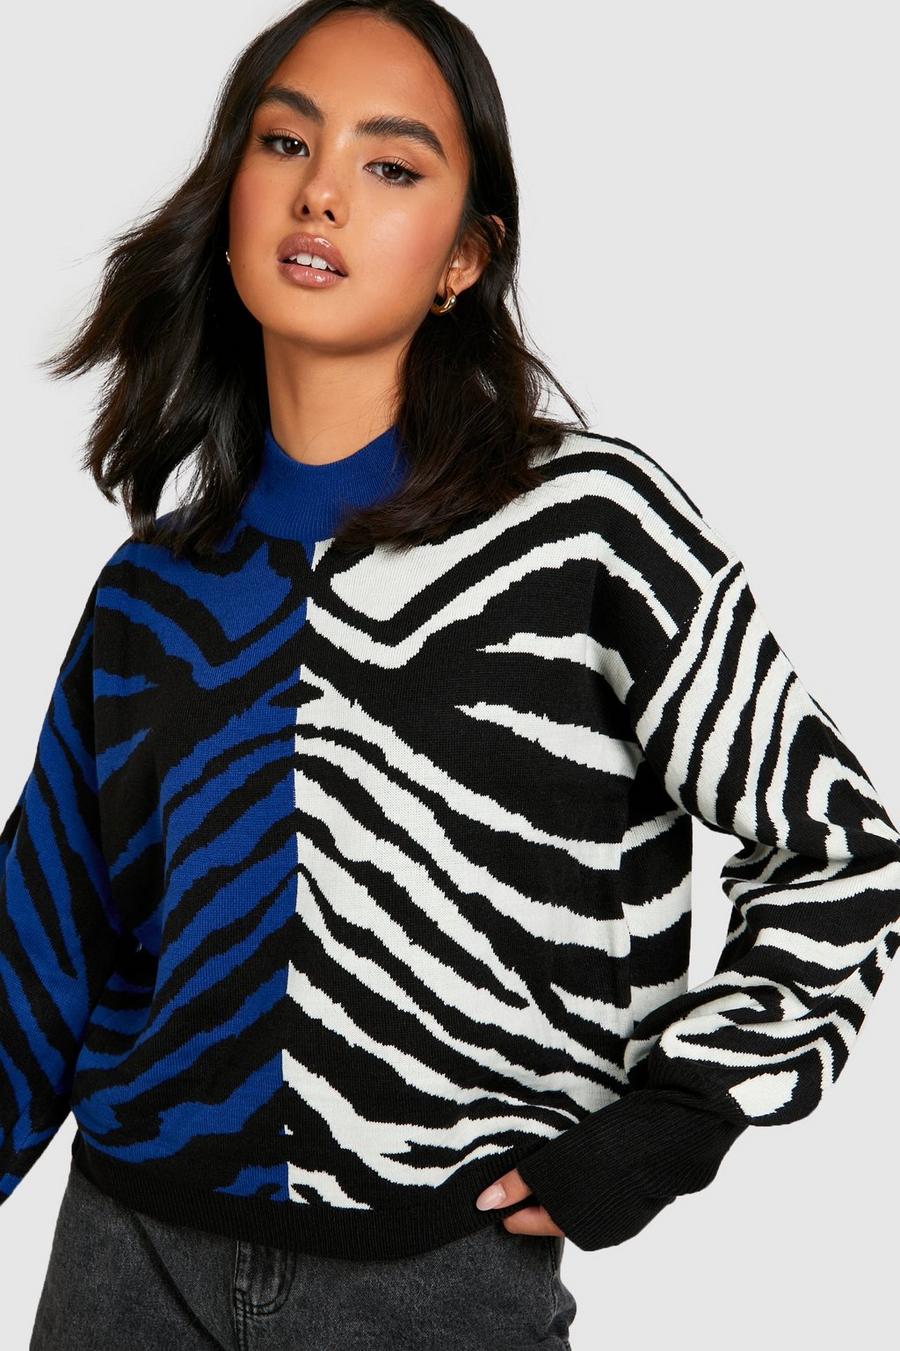 Cobalt blue Color Block Zebra Print Sweater